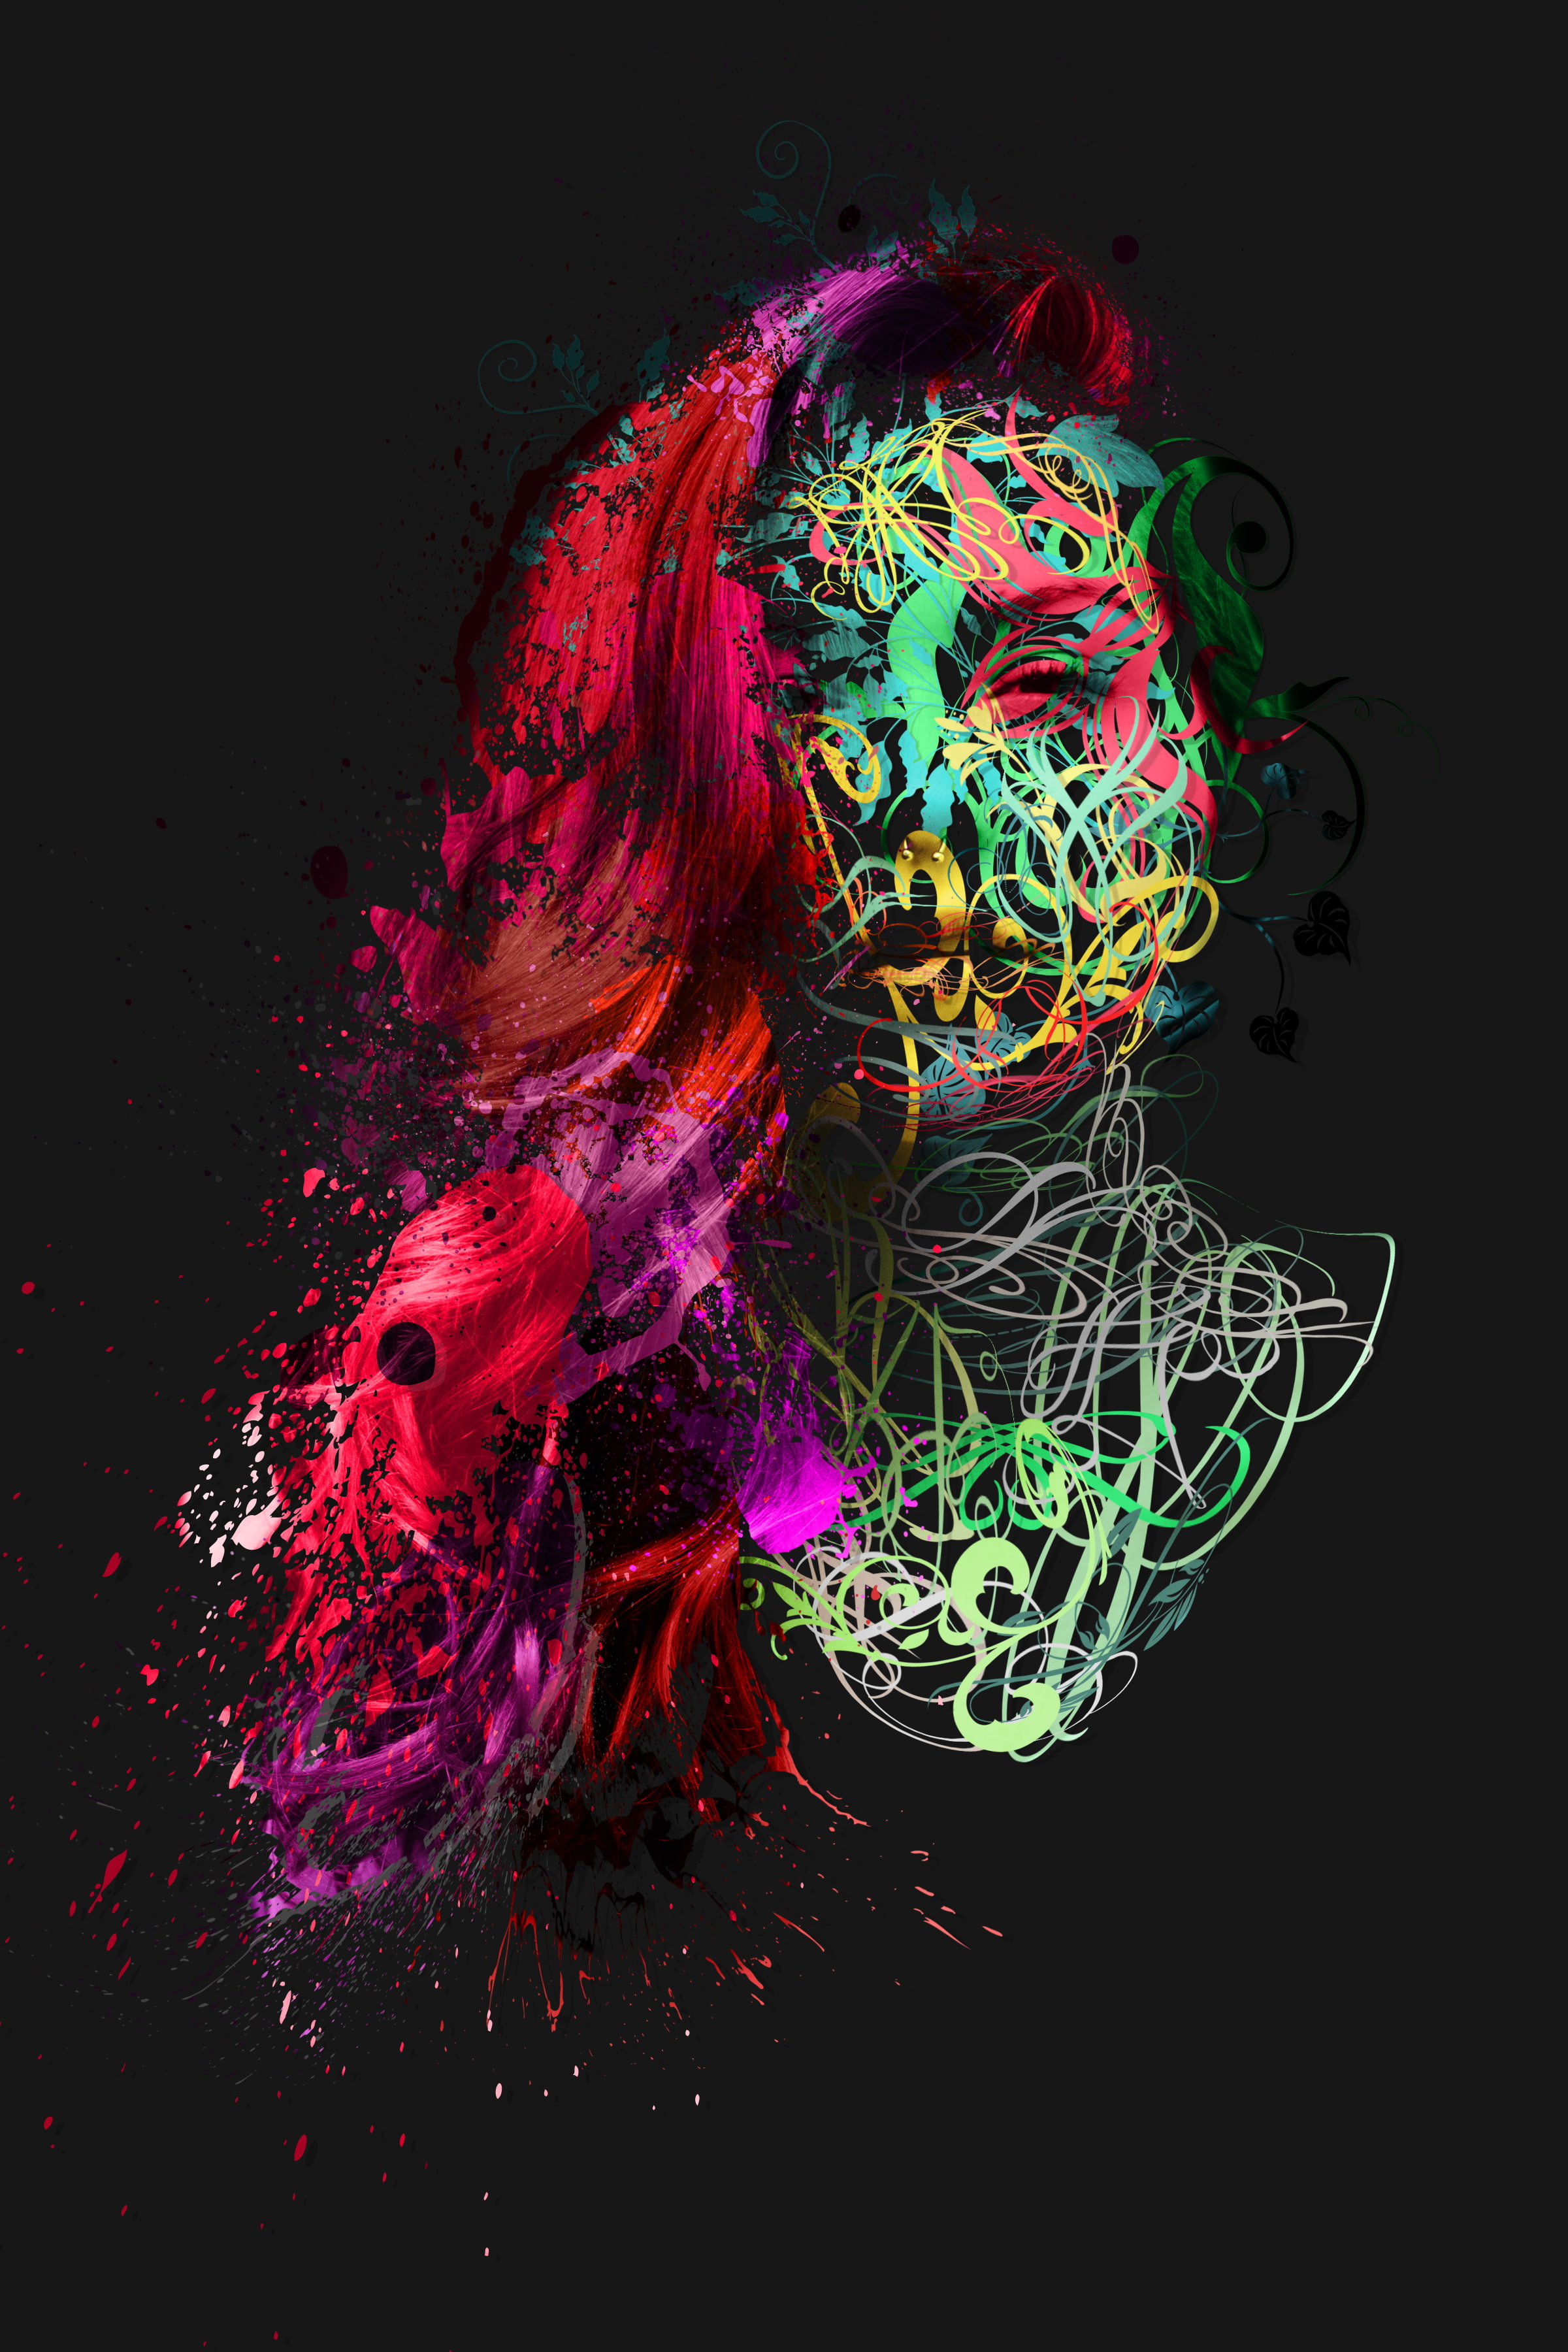 3D Abstract, digital art, photo manipulation, Photoshop, face